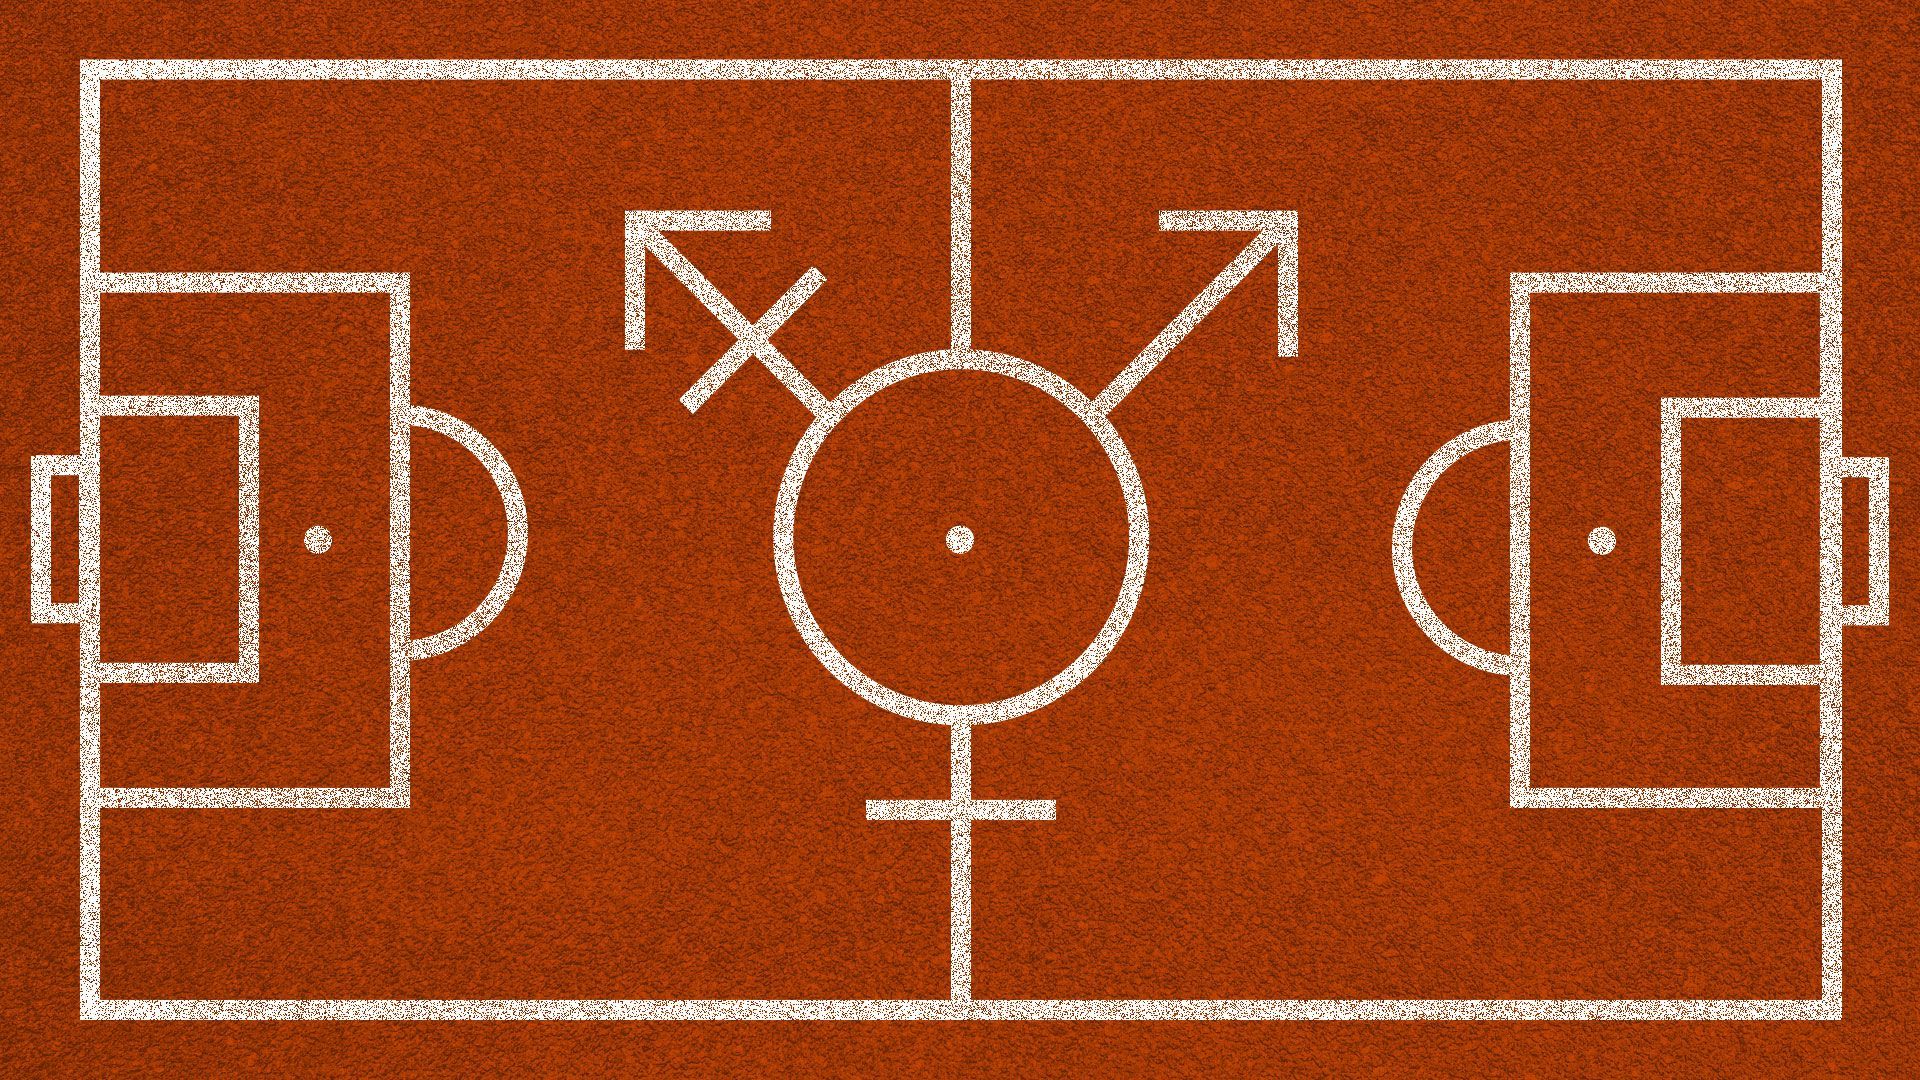 Illustration of the transgender symbol as a sport court